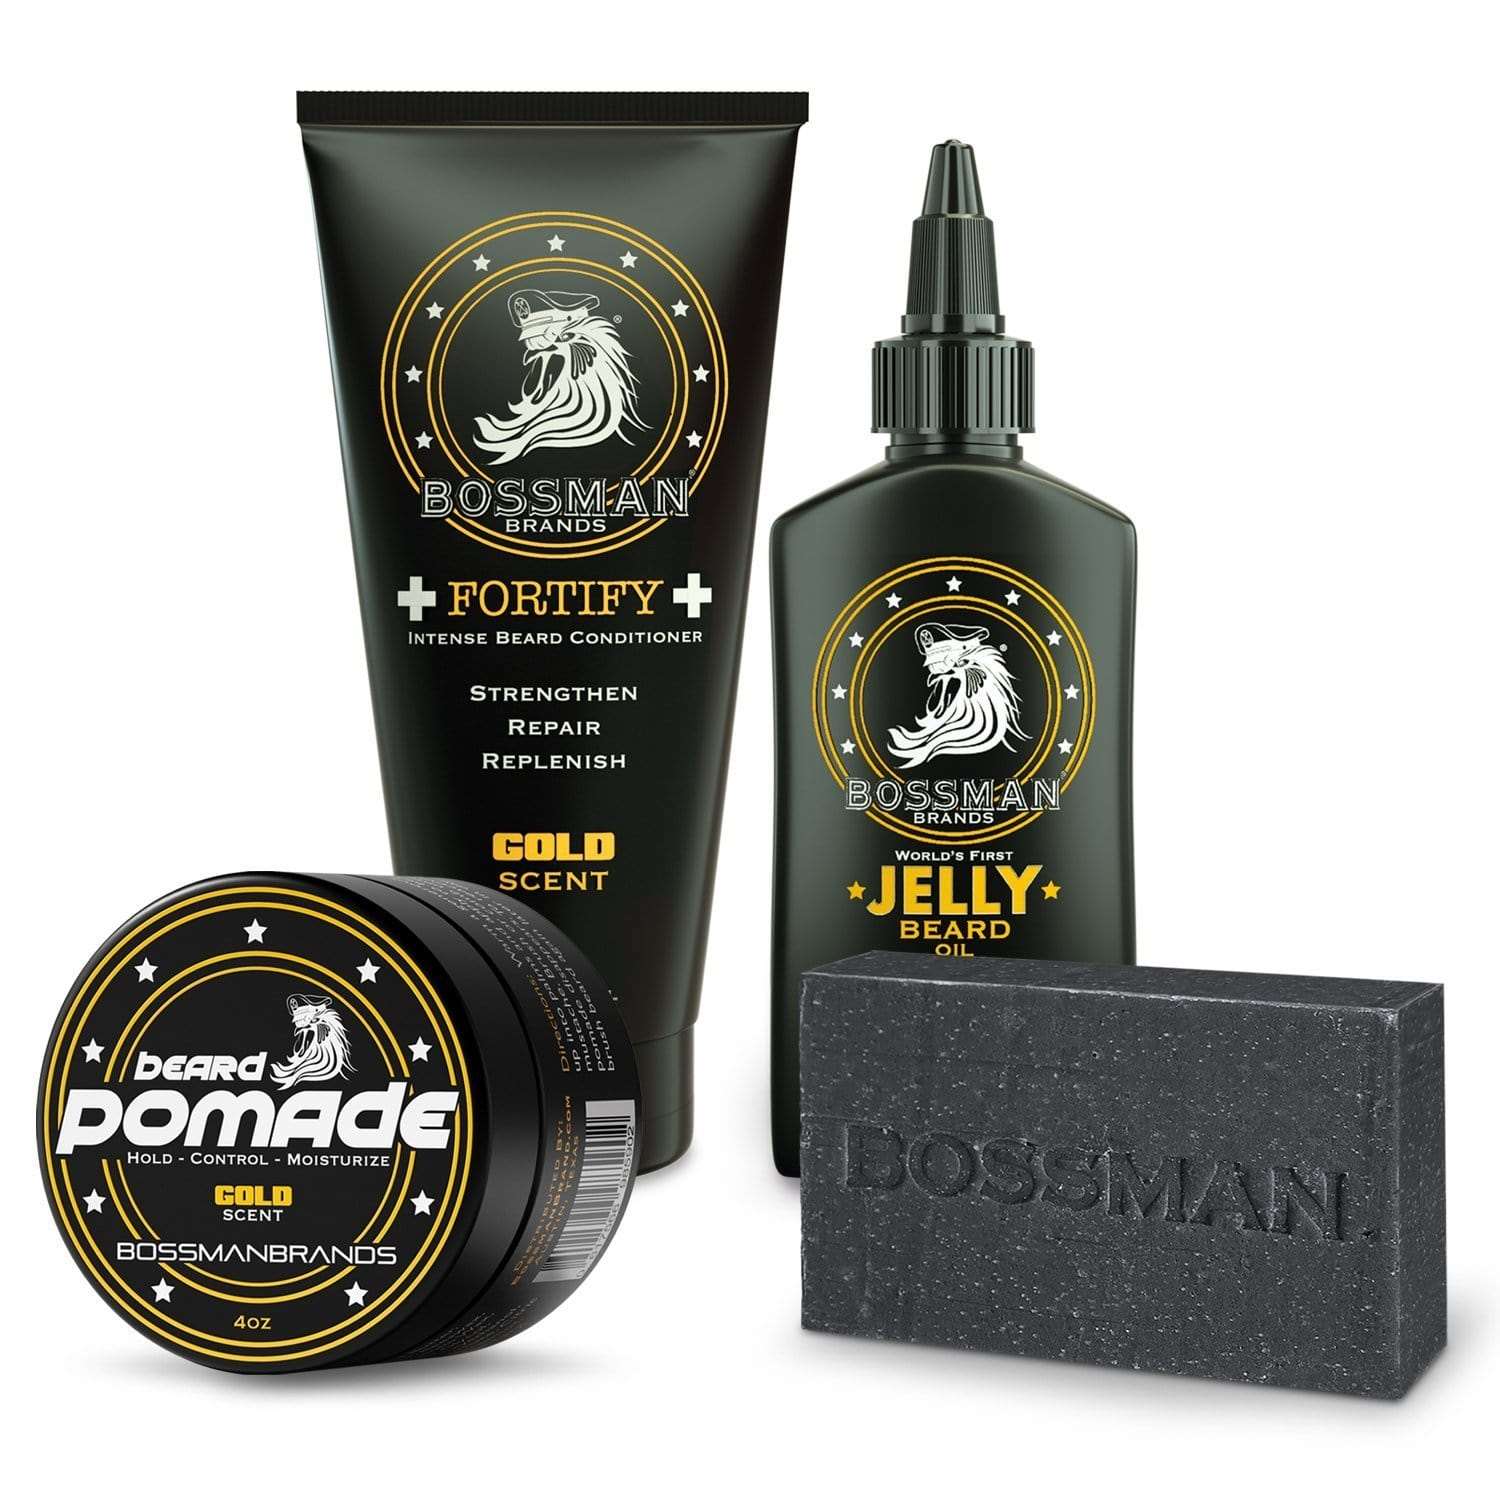 The Professional Beard Kit Bossman Brands